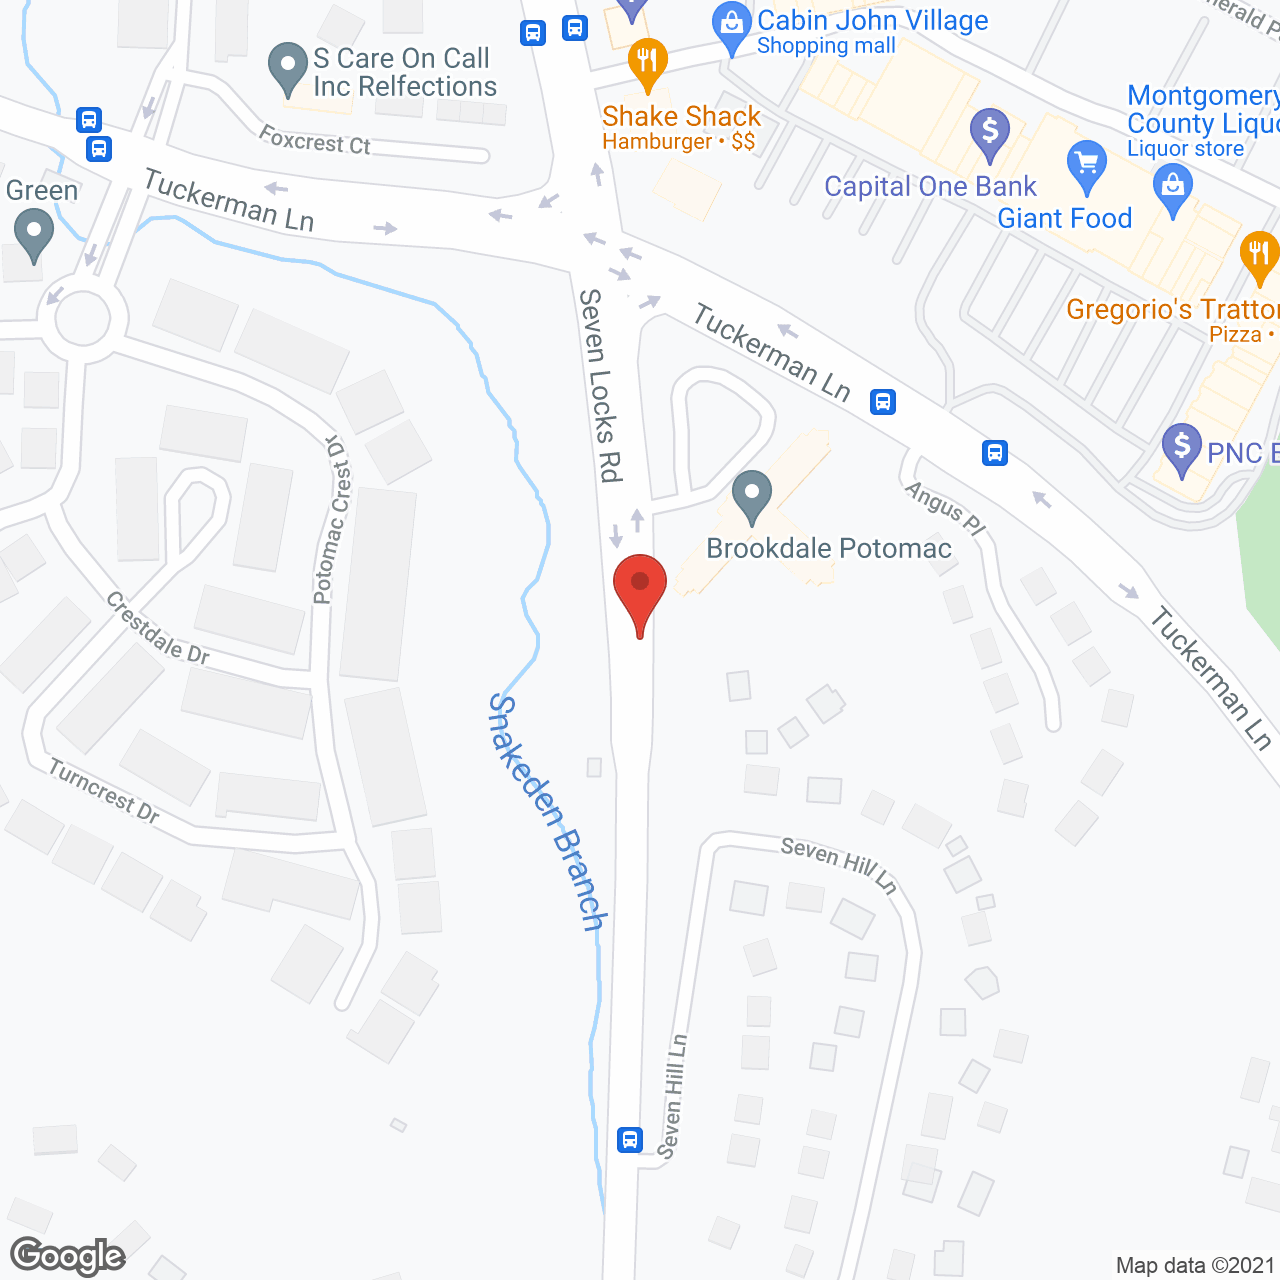 Brookdale Potomac in google map